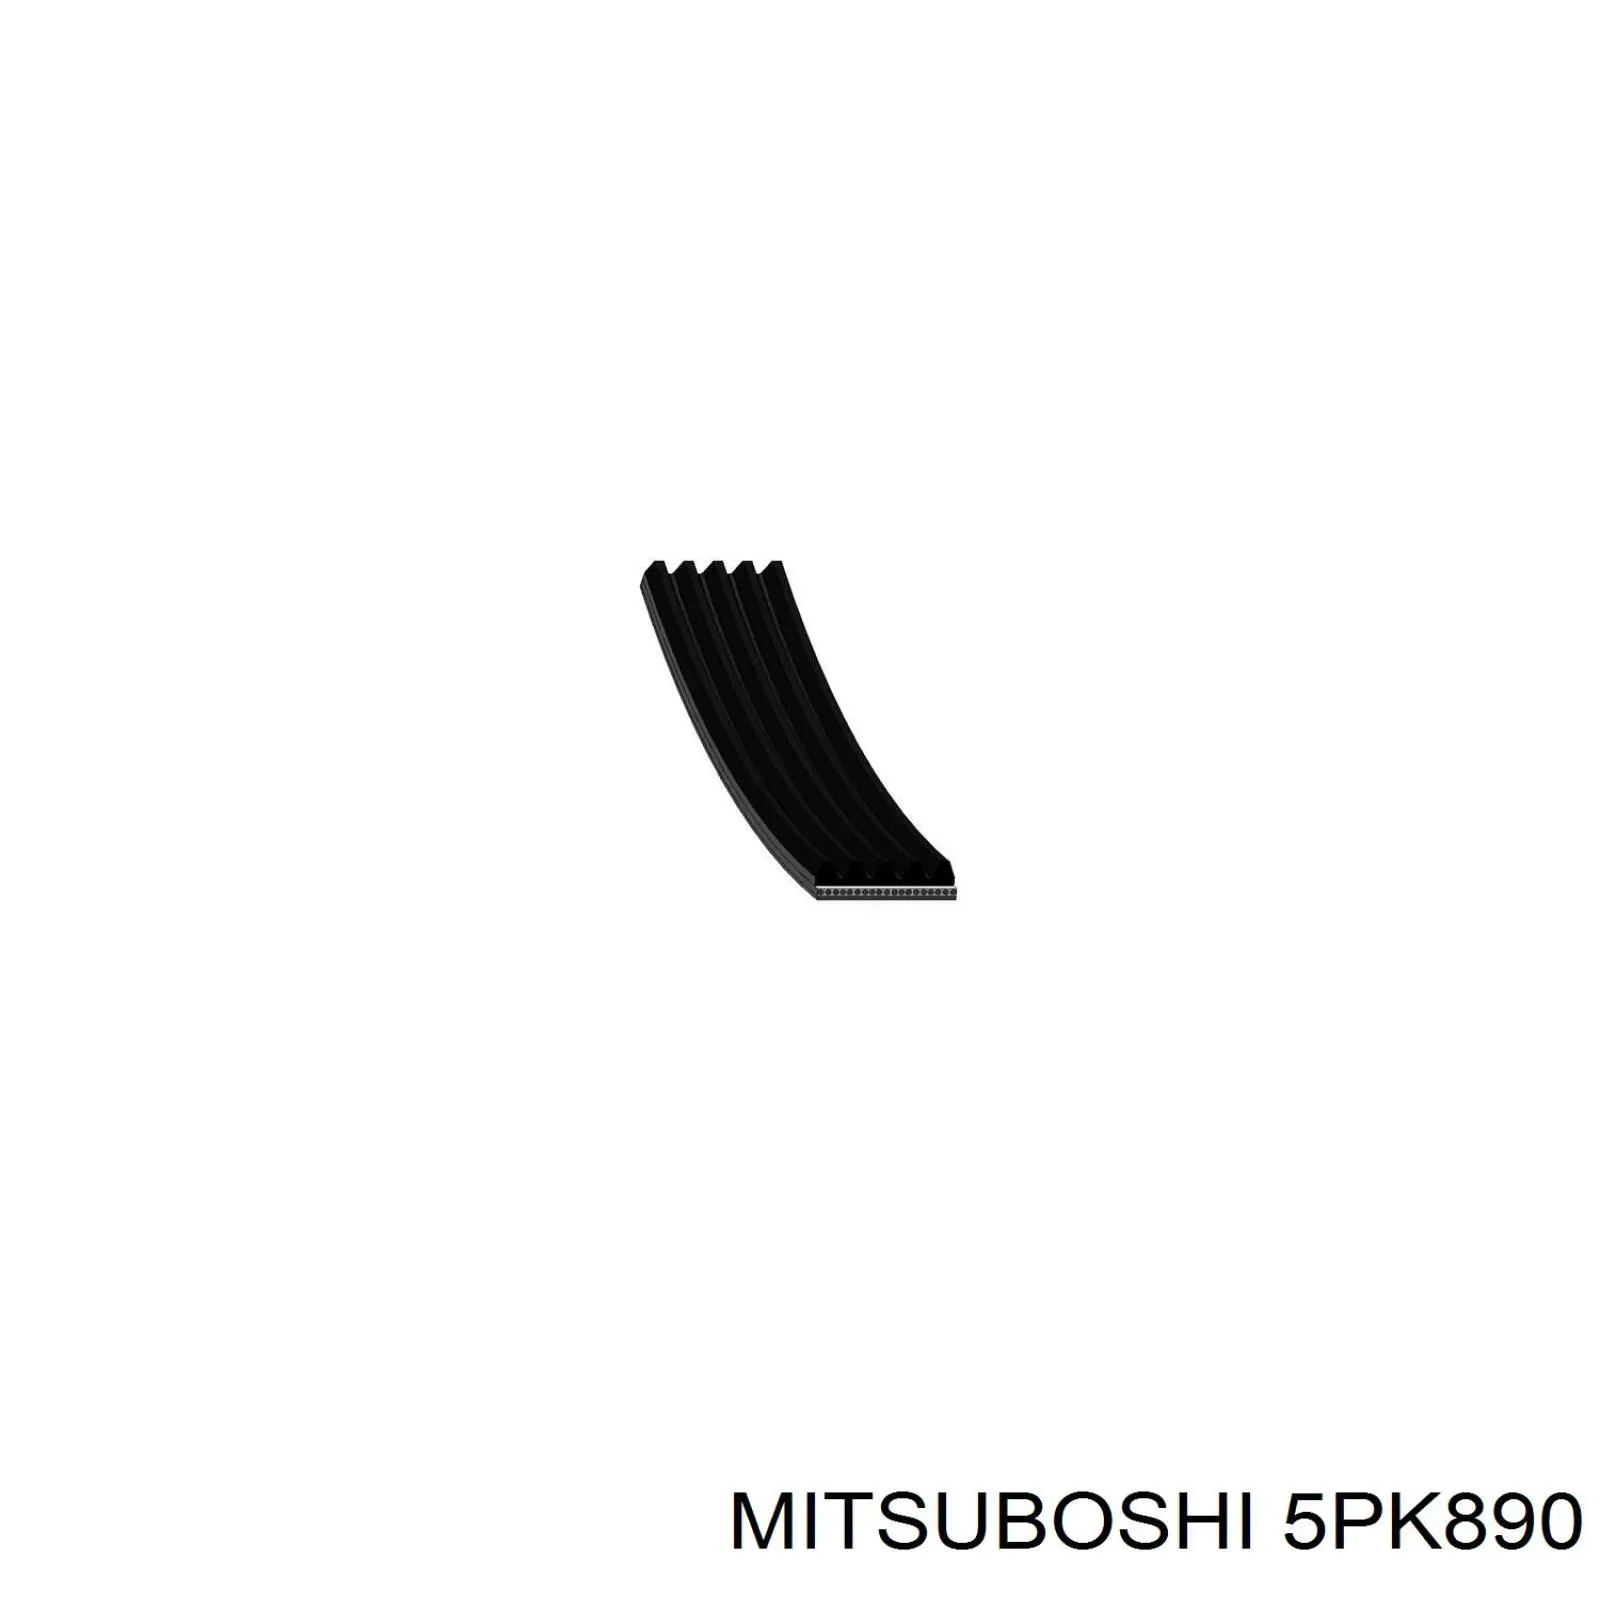 5PK890 Mitsuboshi correa trapezoidal